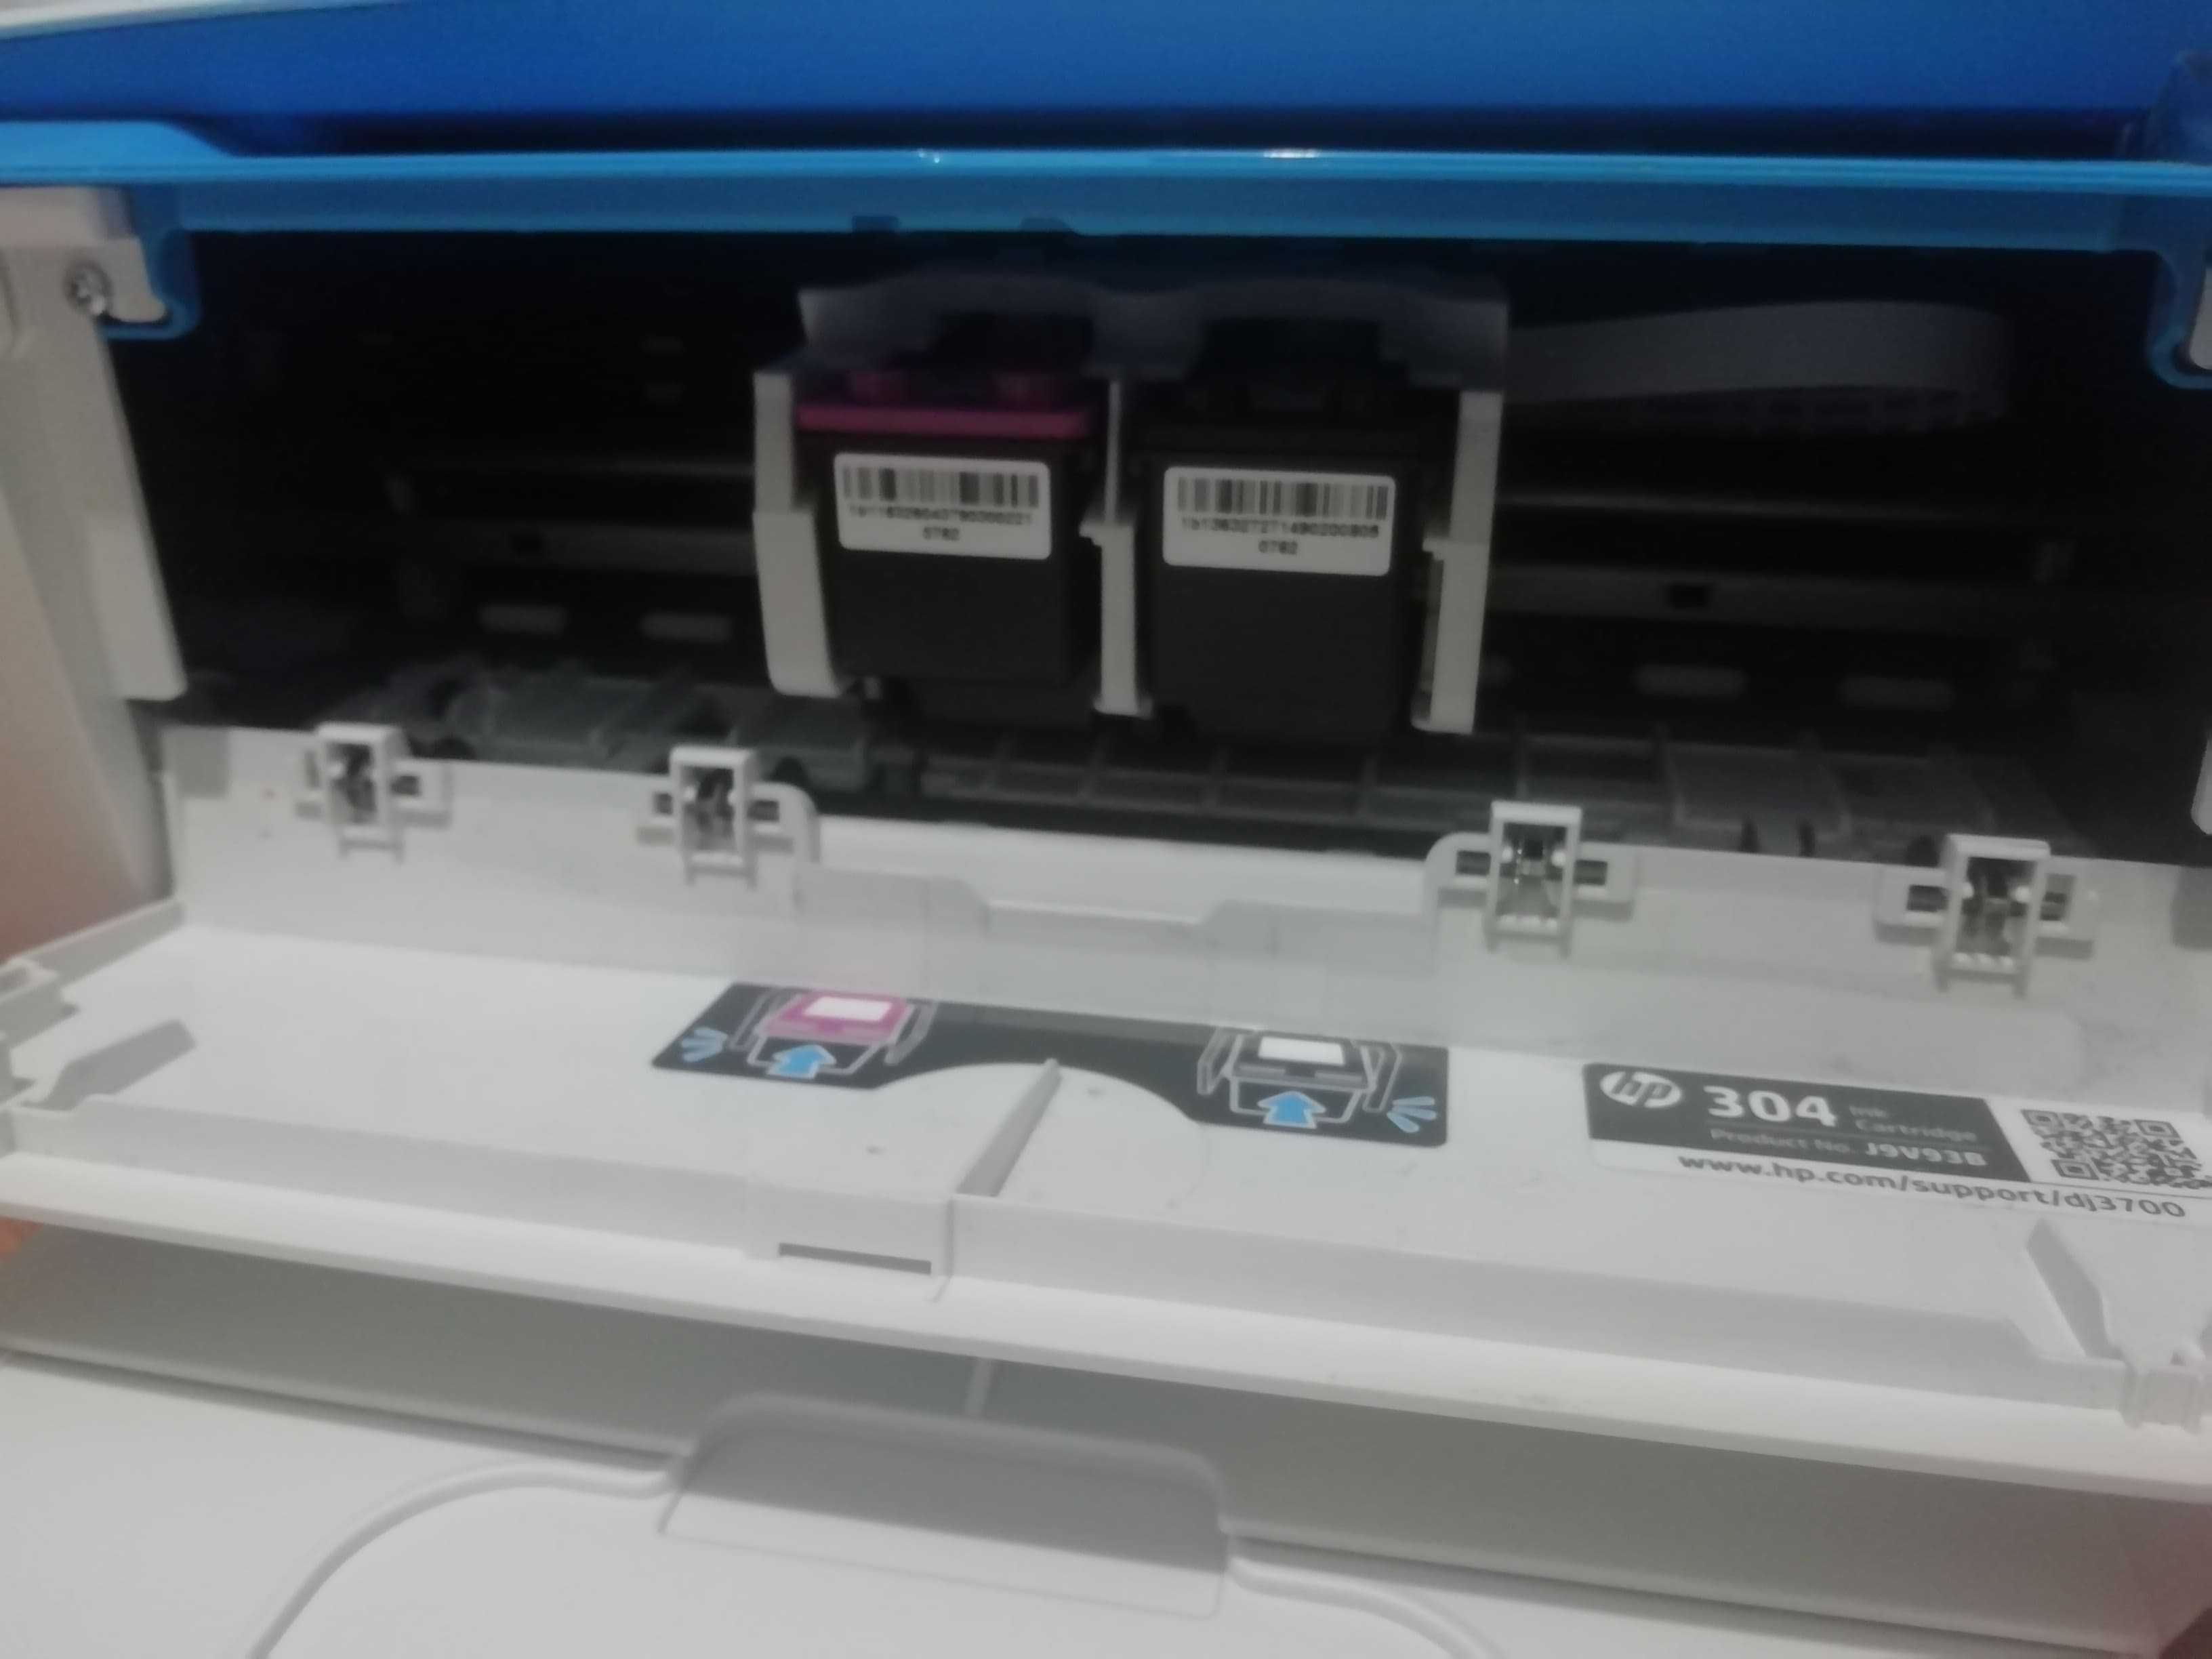 Impressora HP Deskjet 3700 c/ tinteiros